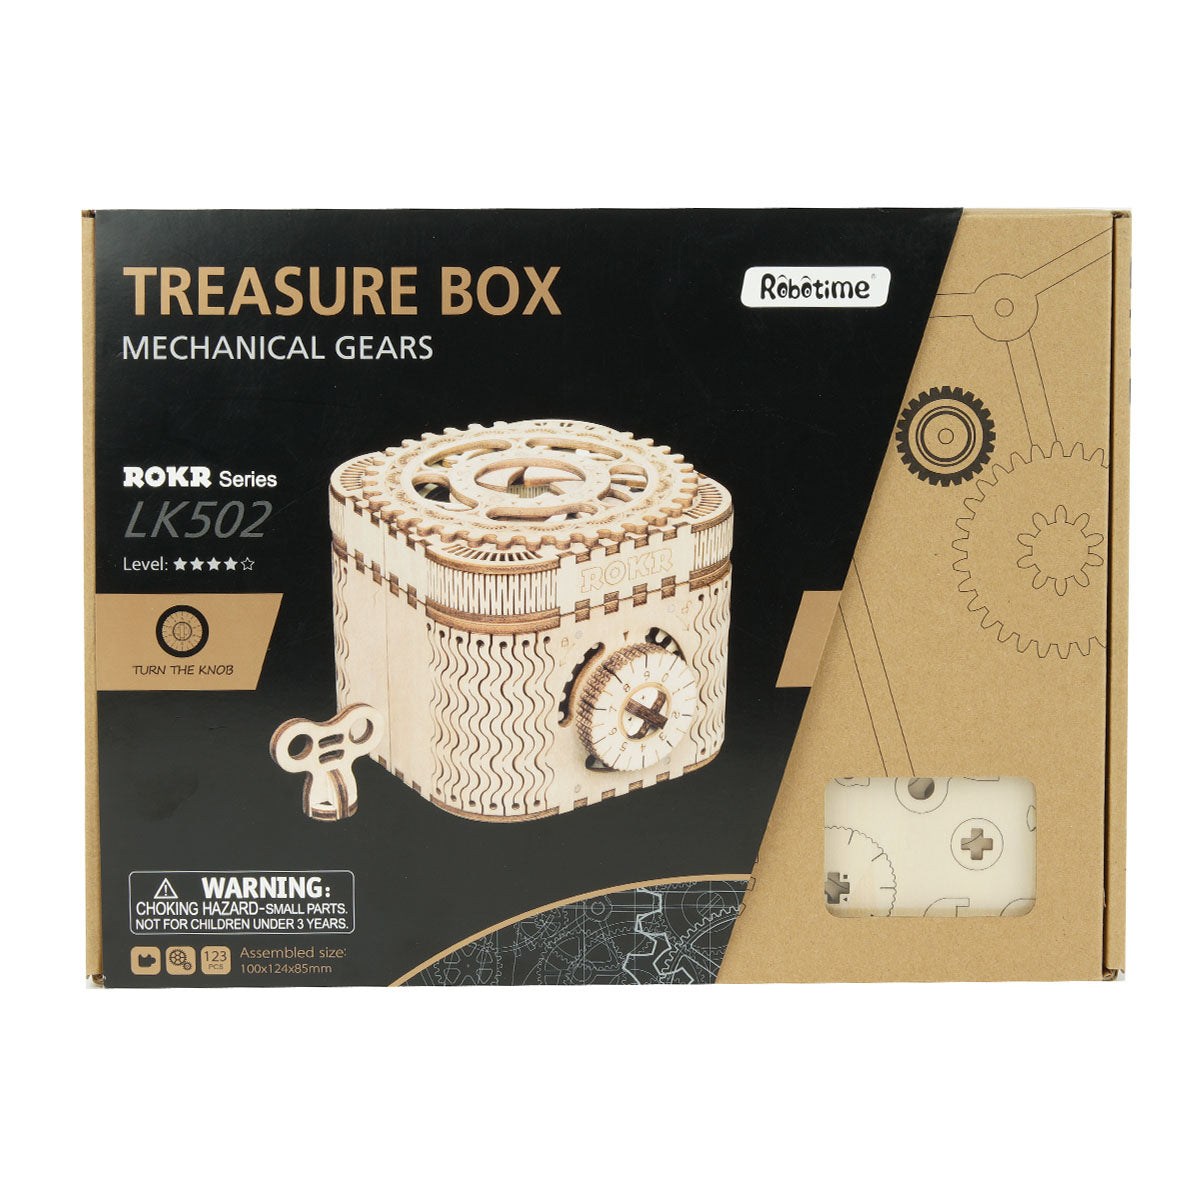 3D Treasure Box Model Kit for Sale